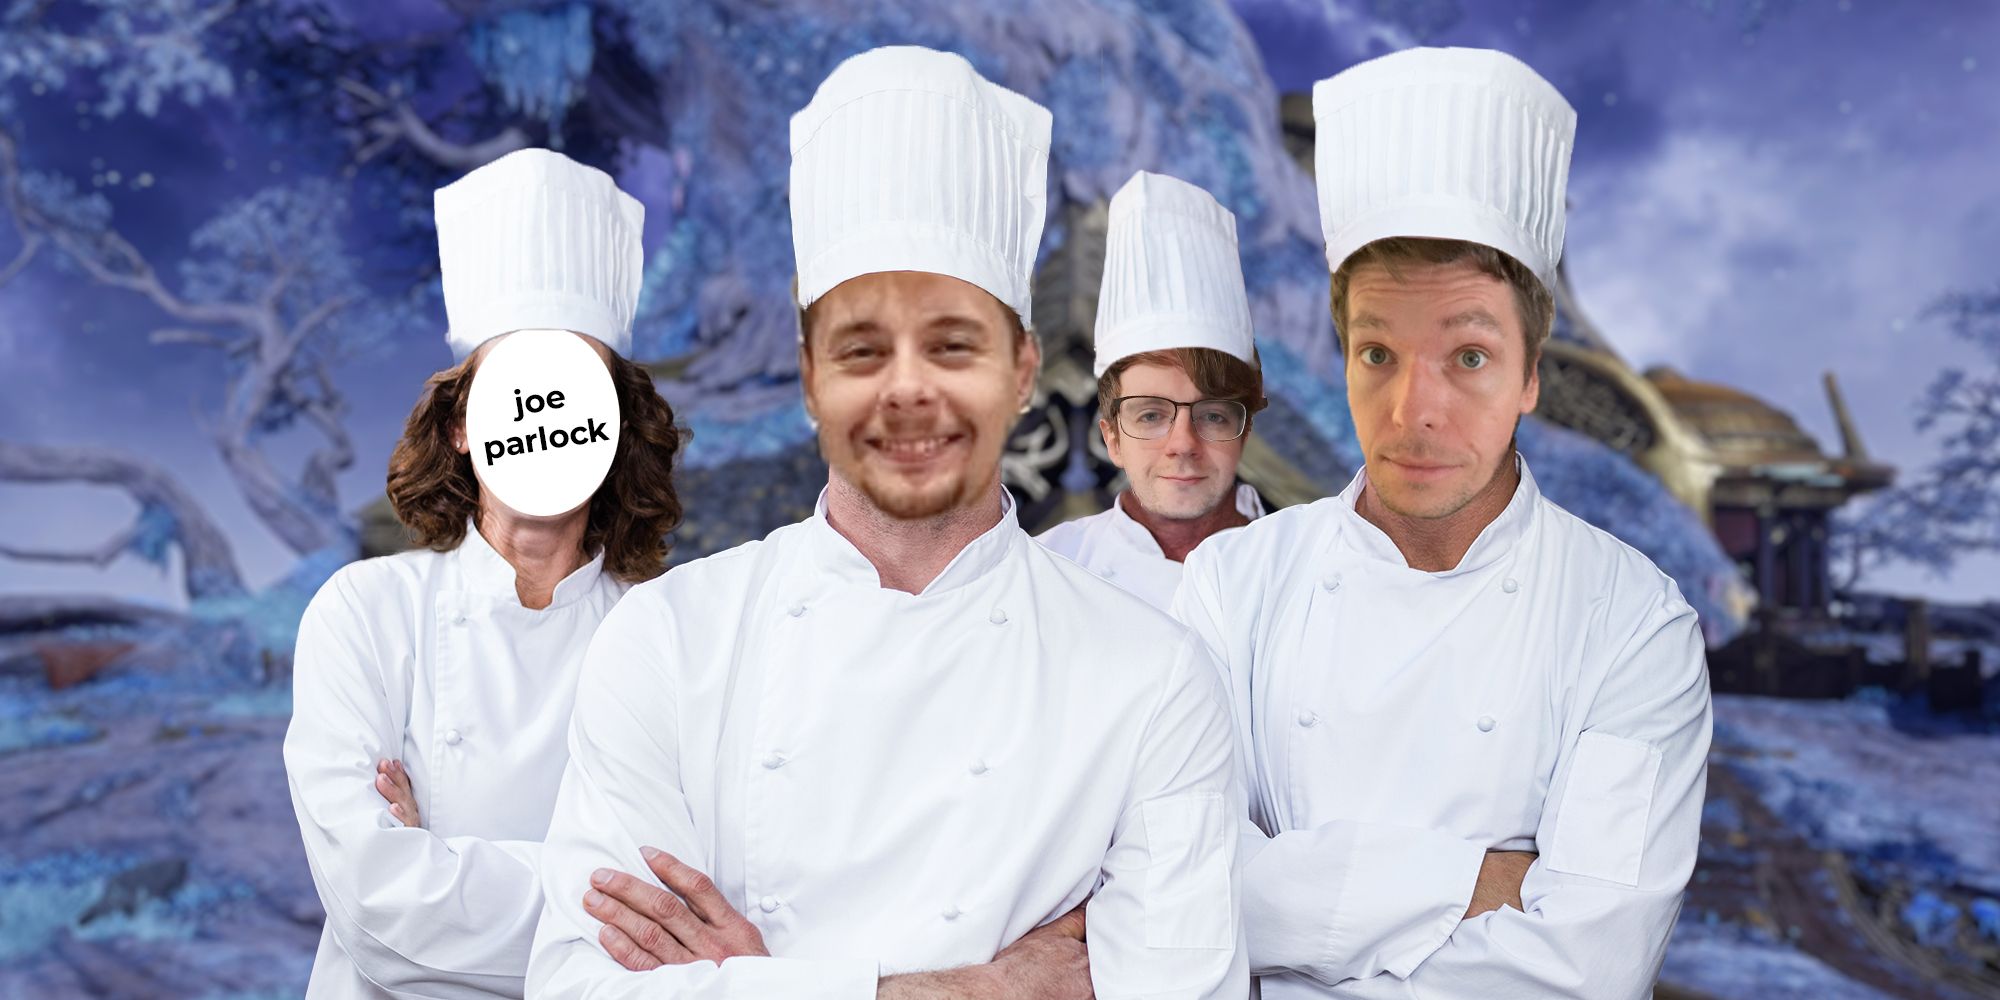 TheGamer as chefs